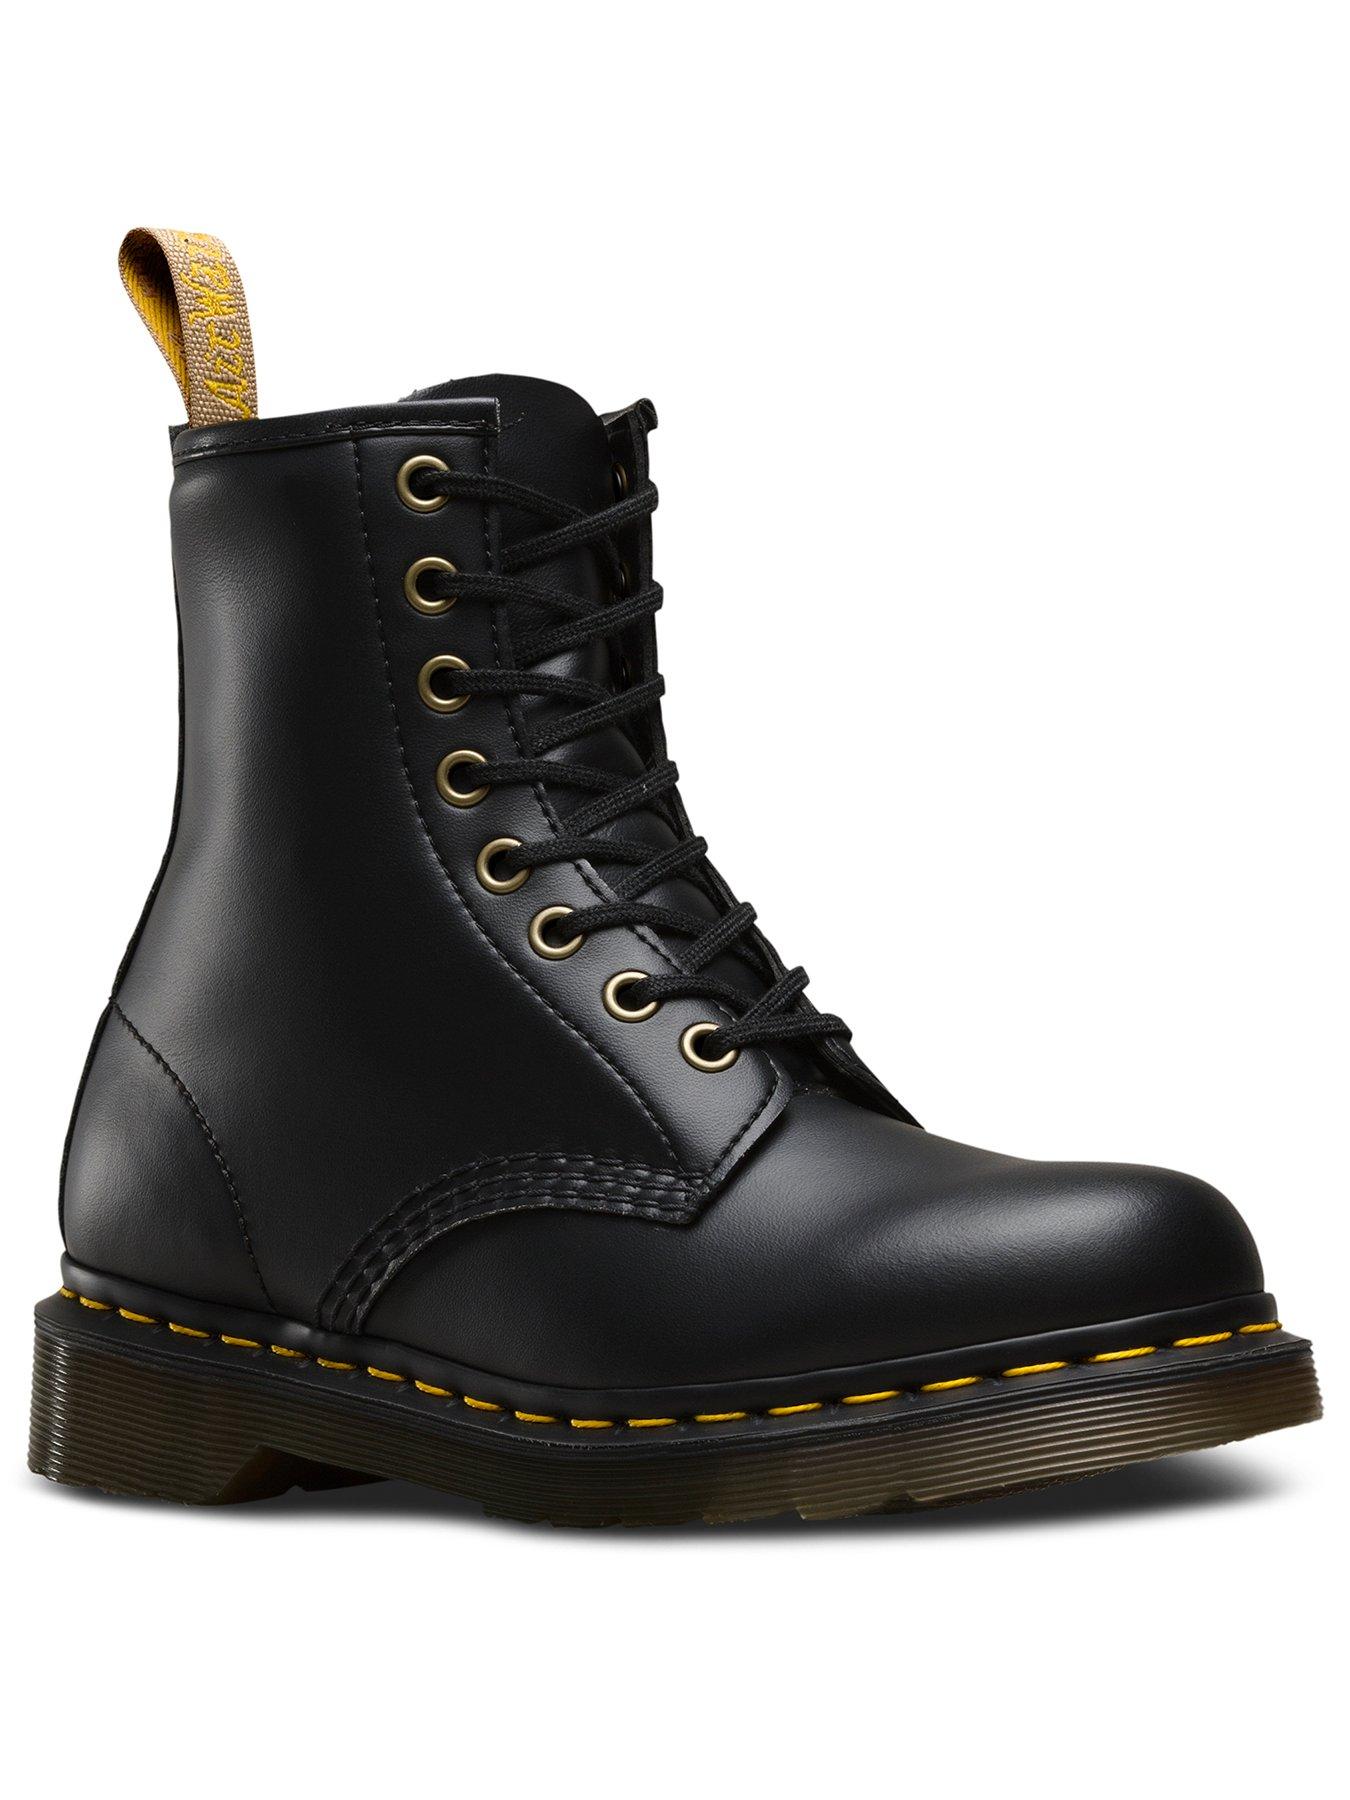 doc martens black boots womens